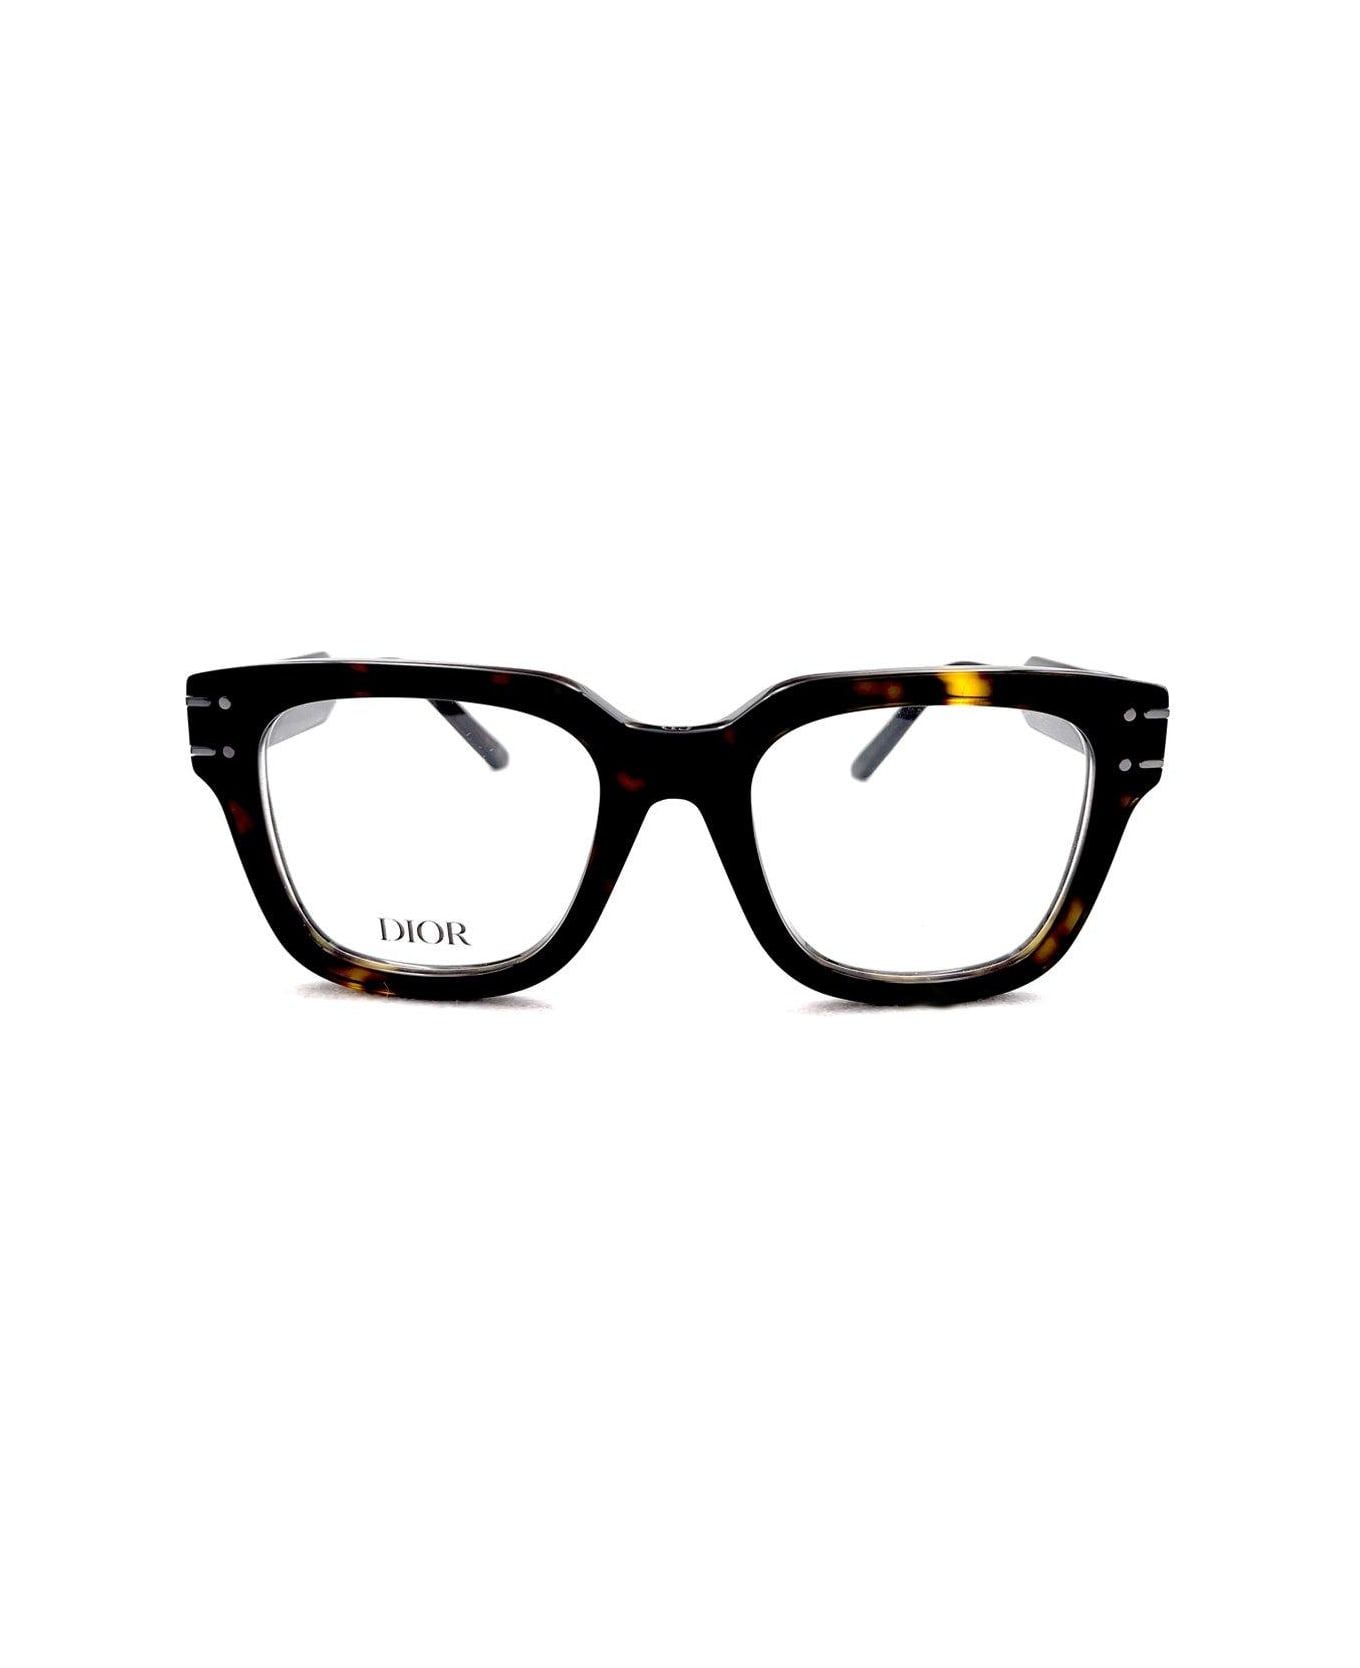 Dior Eyewear Square Frame Glasses - 2000